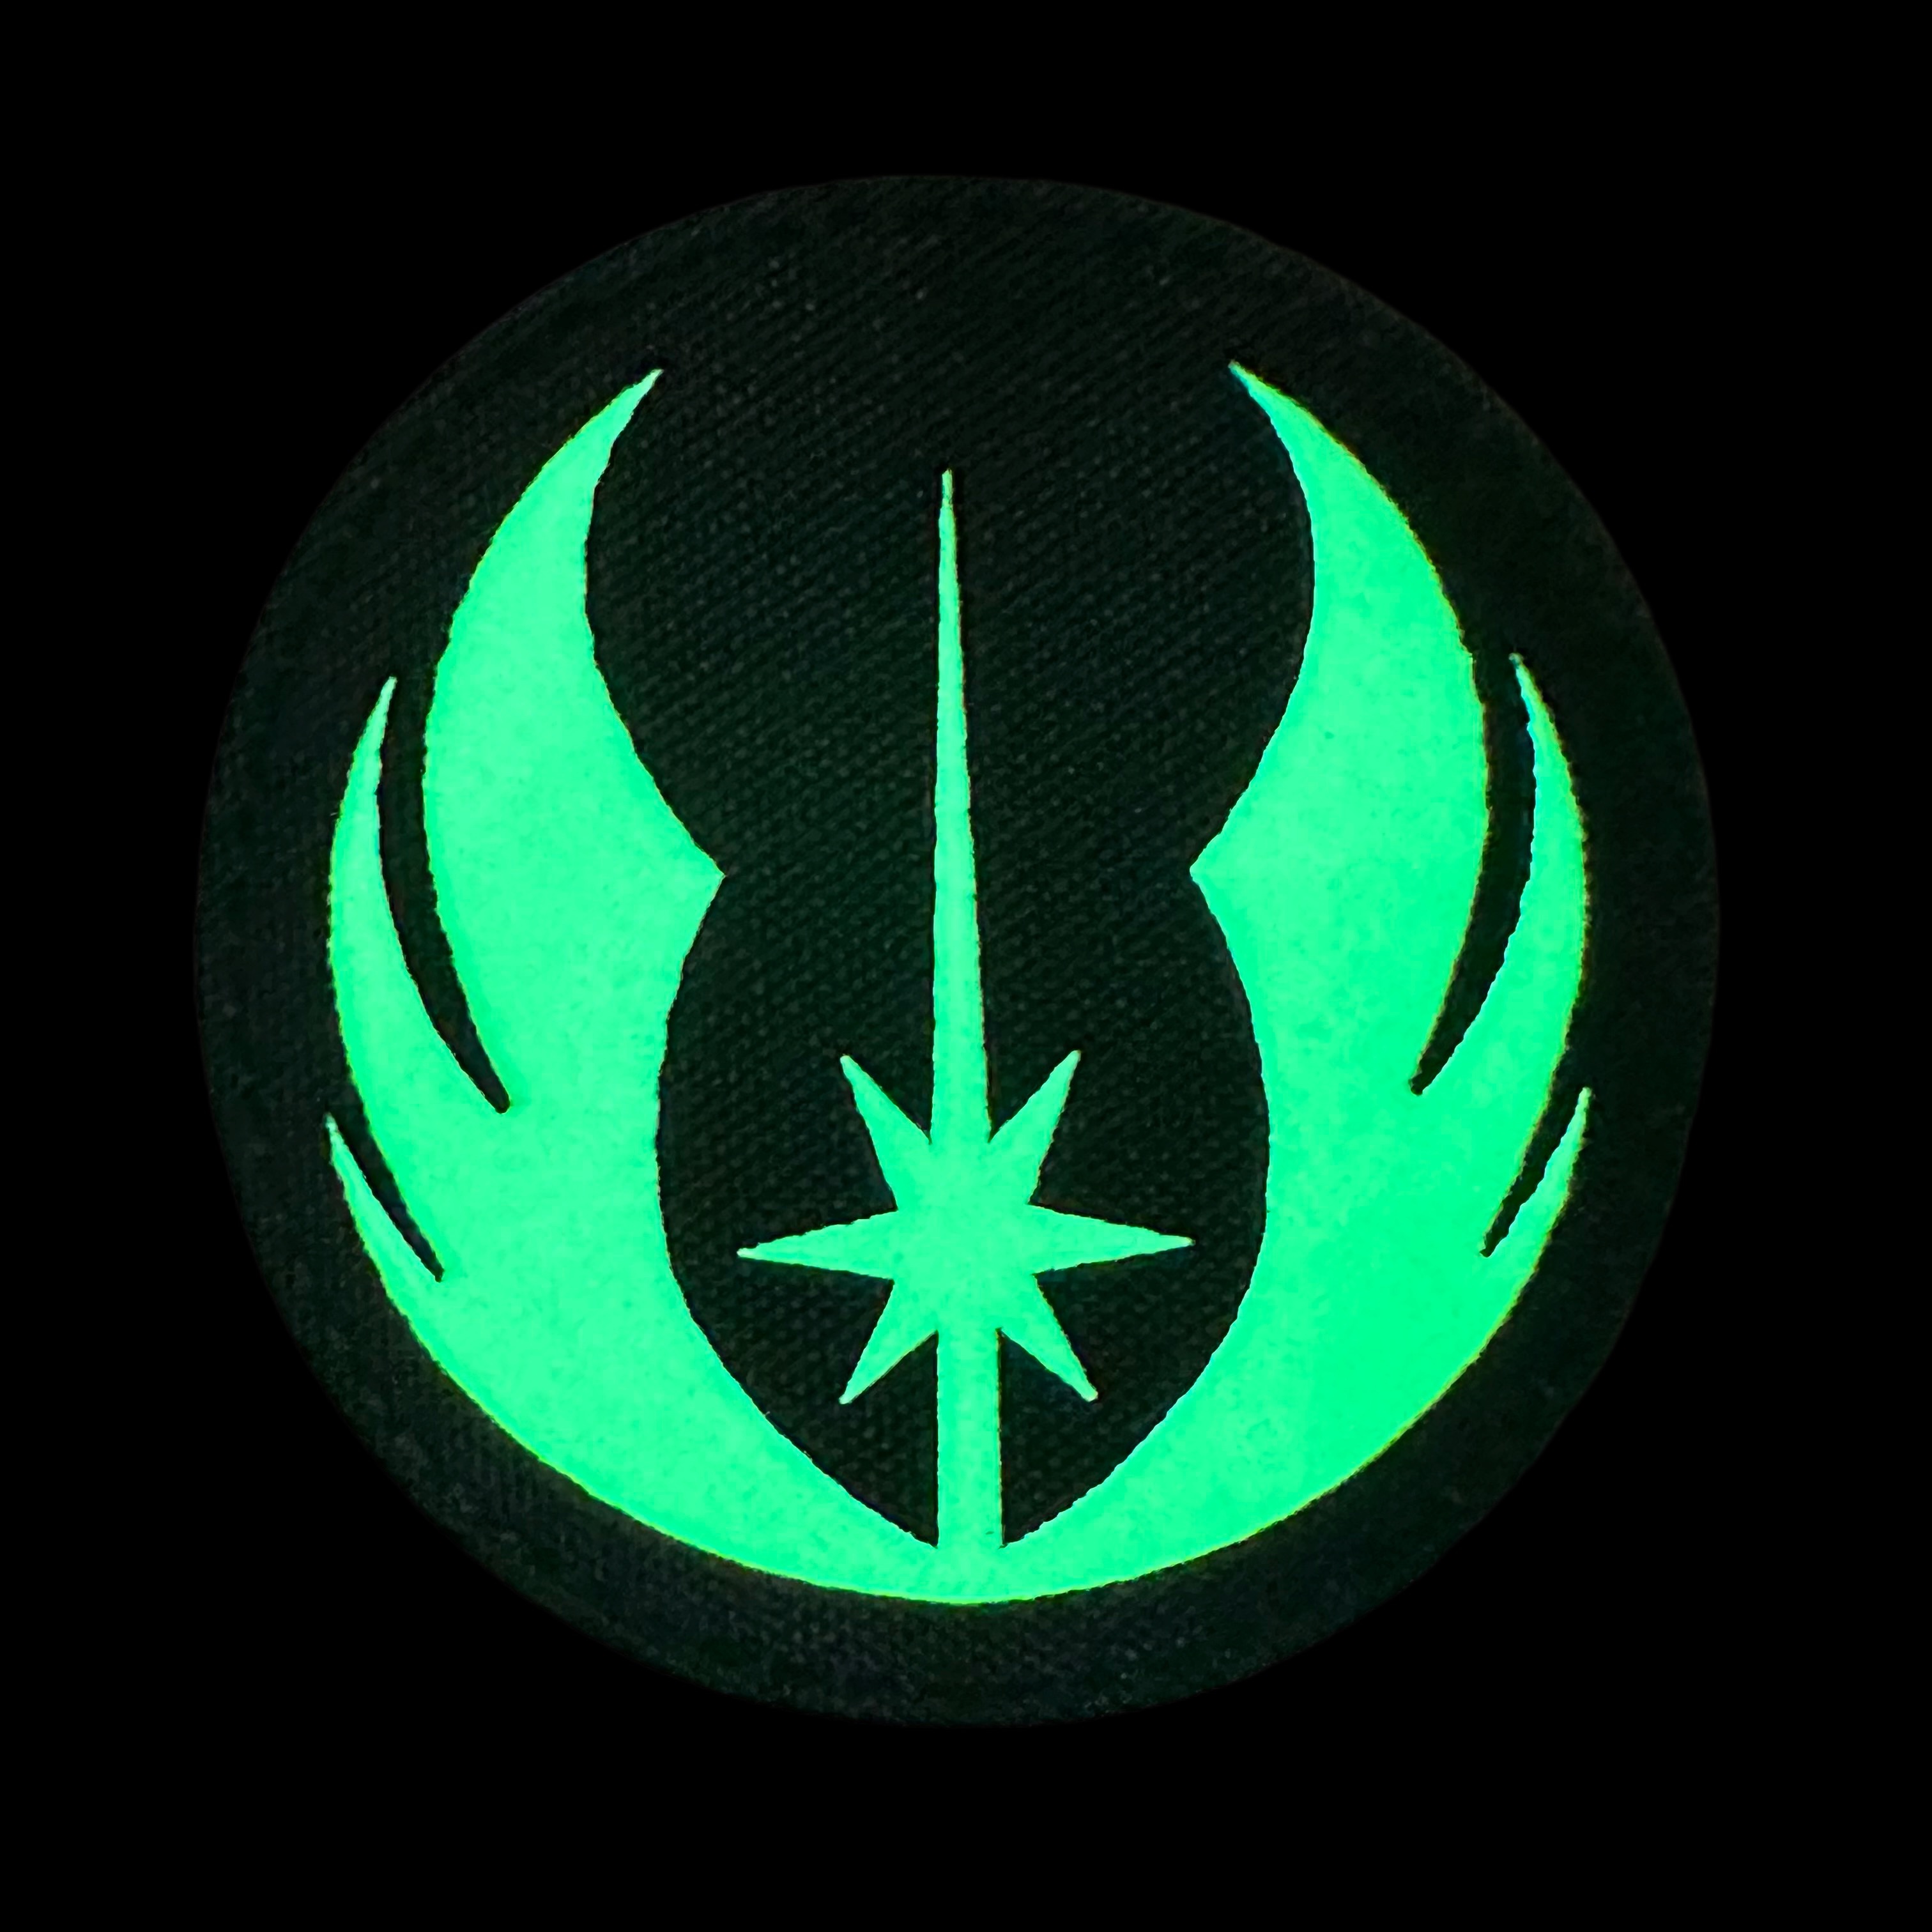 Laser Cut Patch - Jedi Order Glow